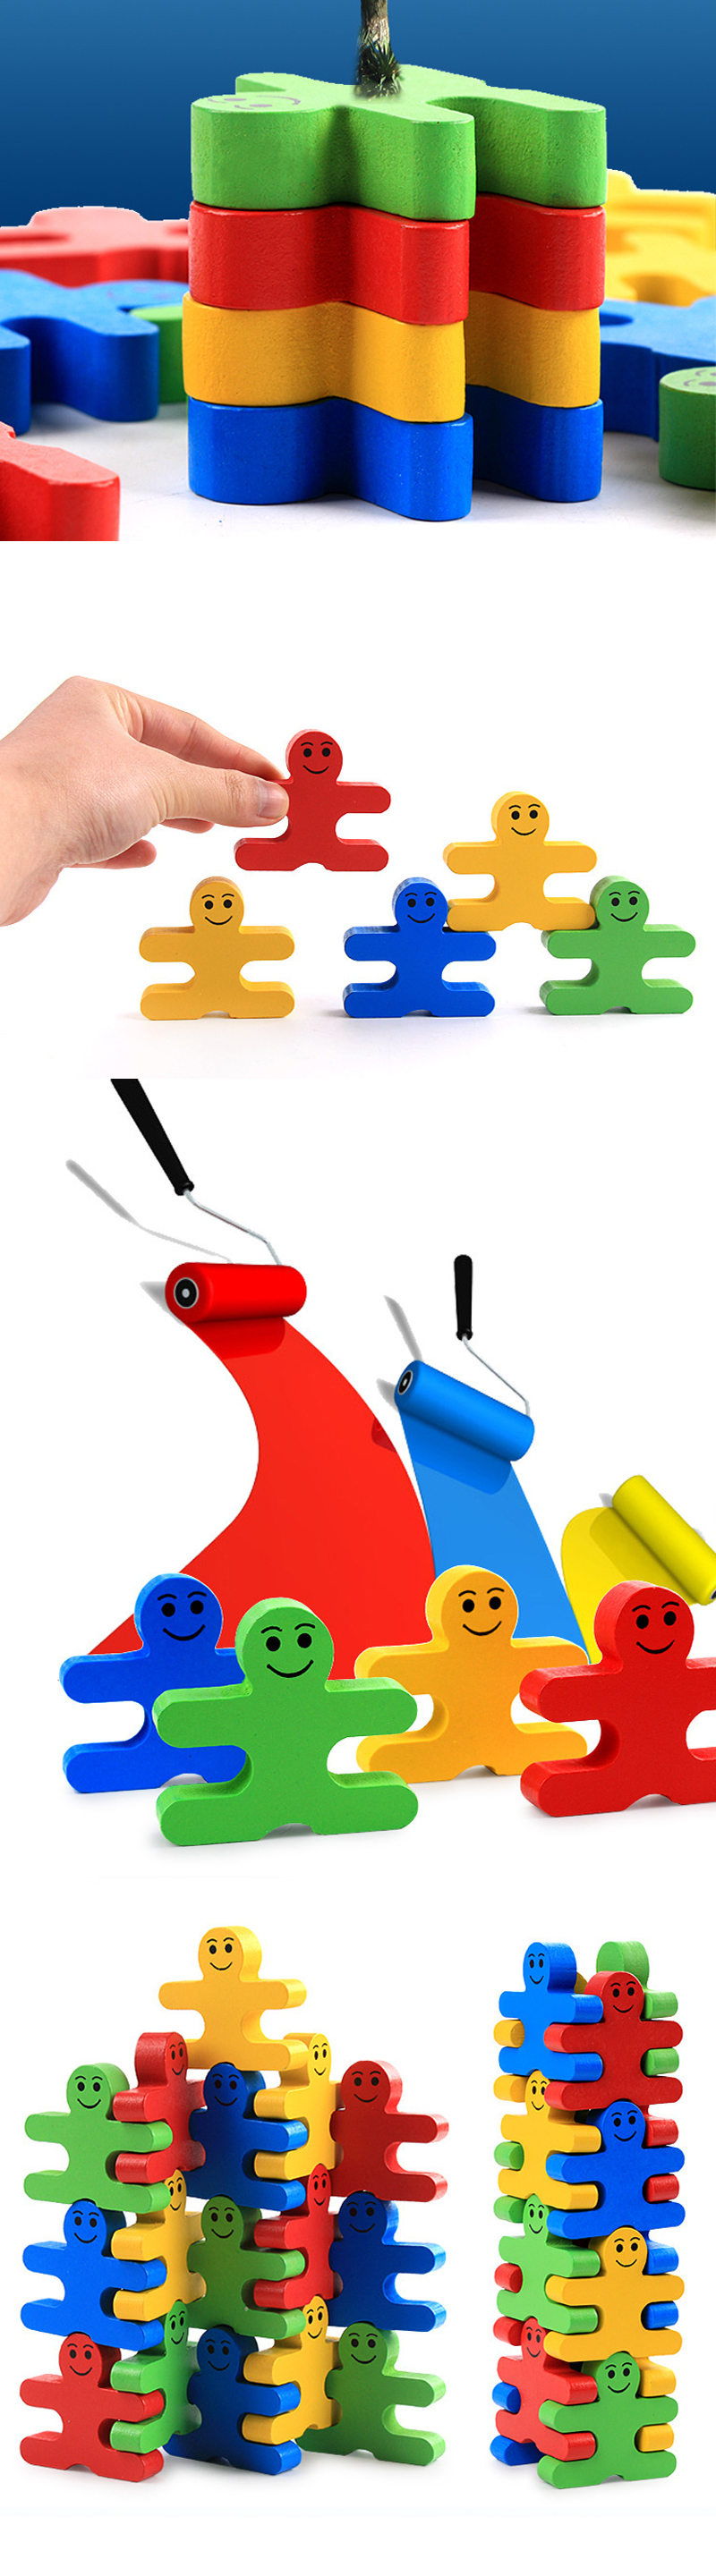 Wooden-Creative-Cartoon-Balance-Building-Blocks-Childrens-Educational-Wooden-Blocks-Toys-Kindergarte-1536420-2